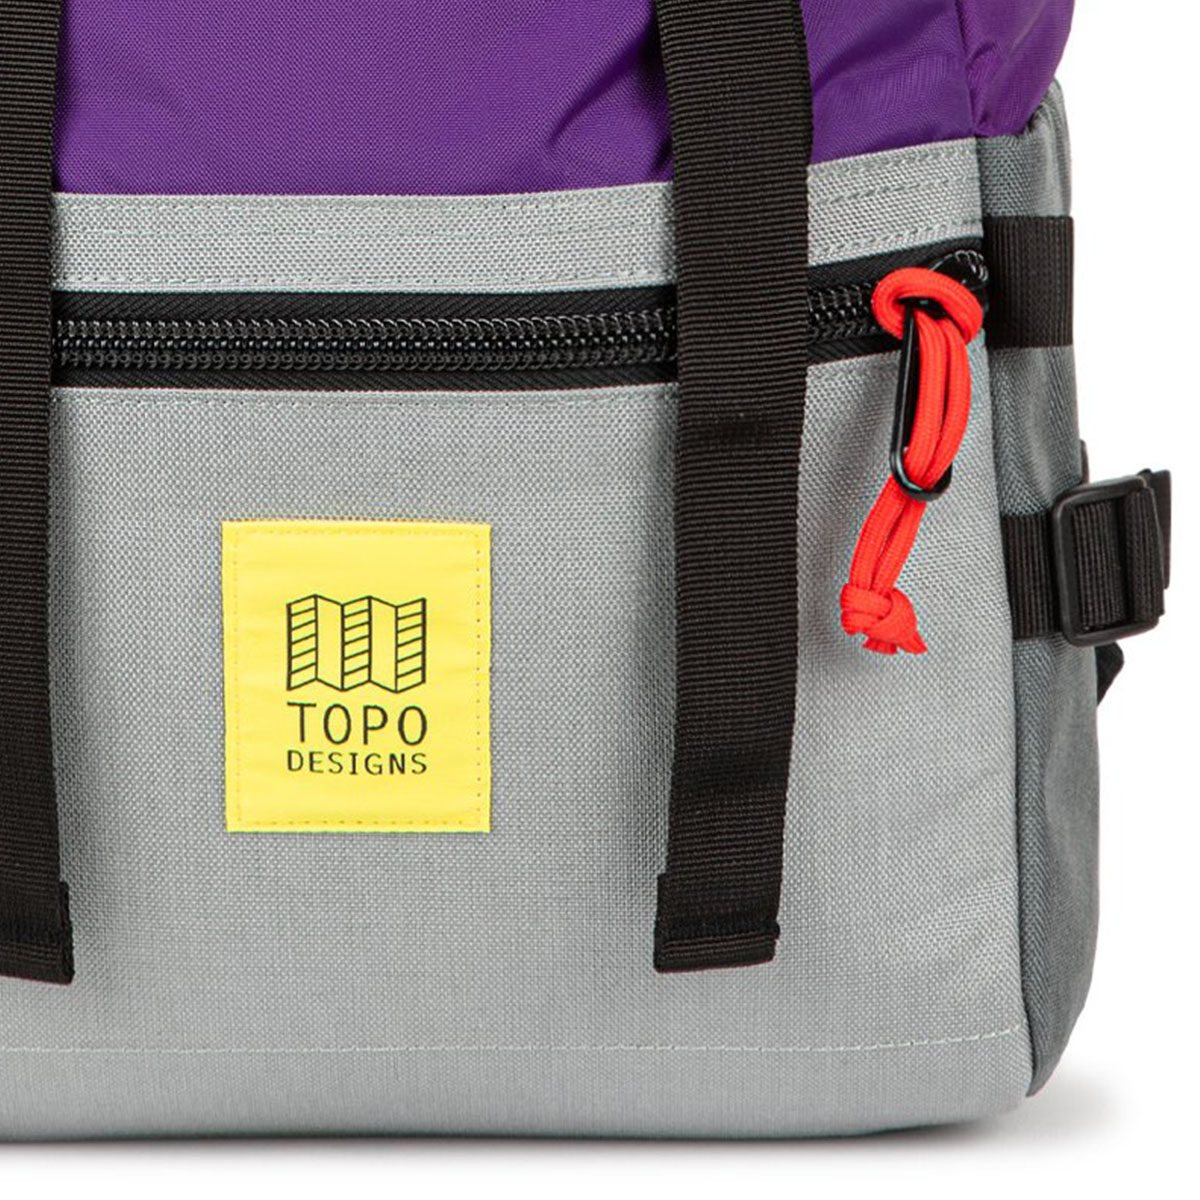 Topo Designs Rover Pack Classic Purple/Silver/Turquoise, sterke, moderne en tijdloze rugzak